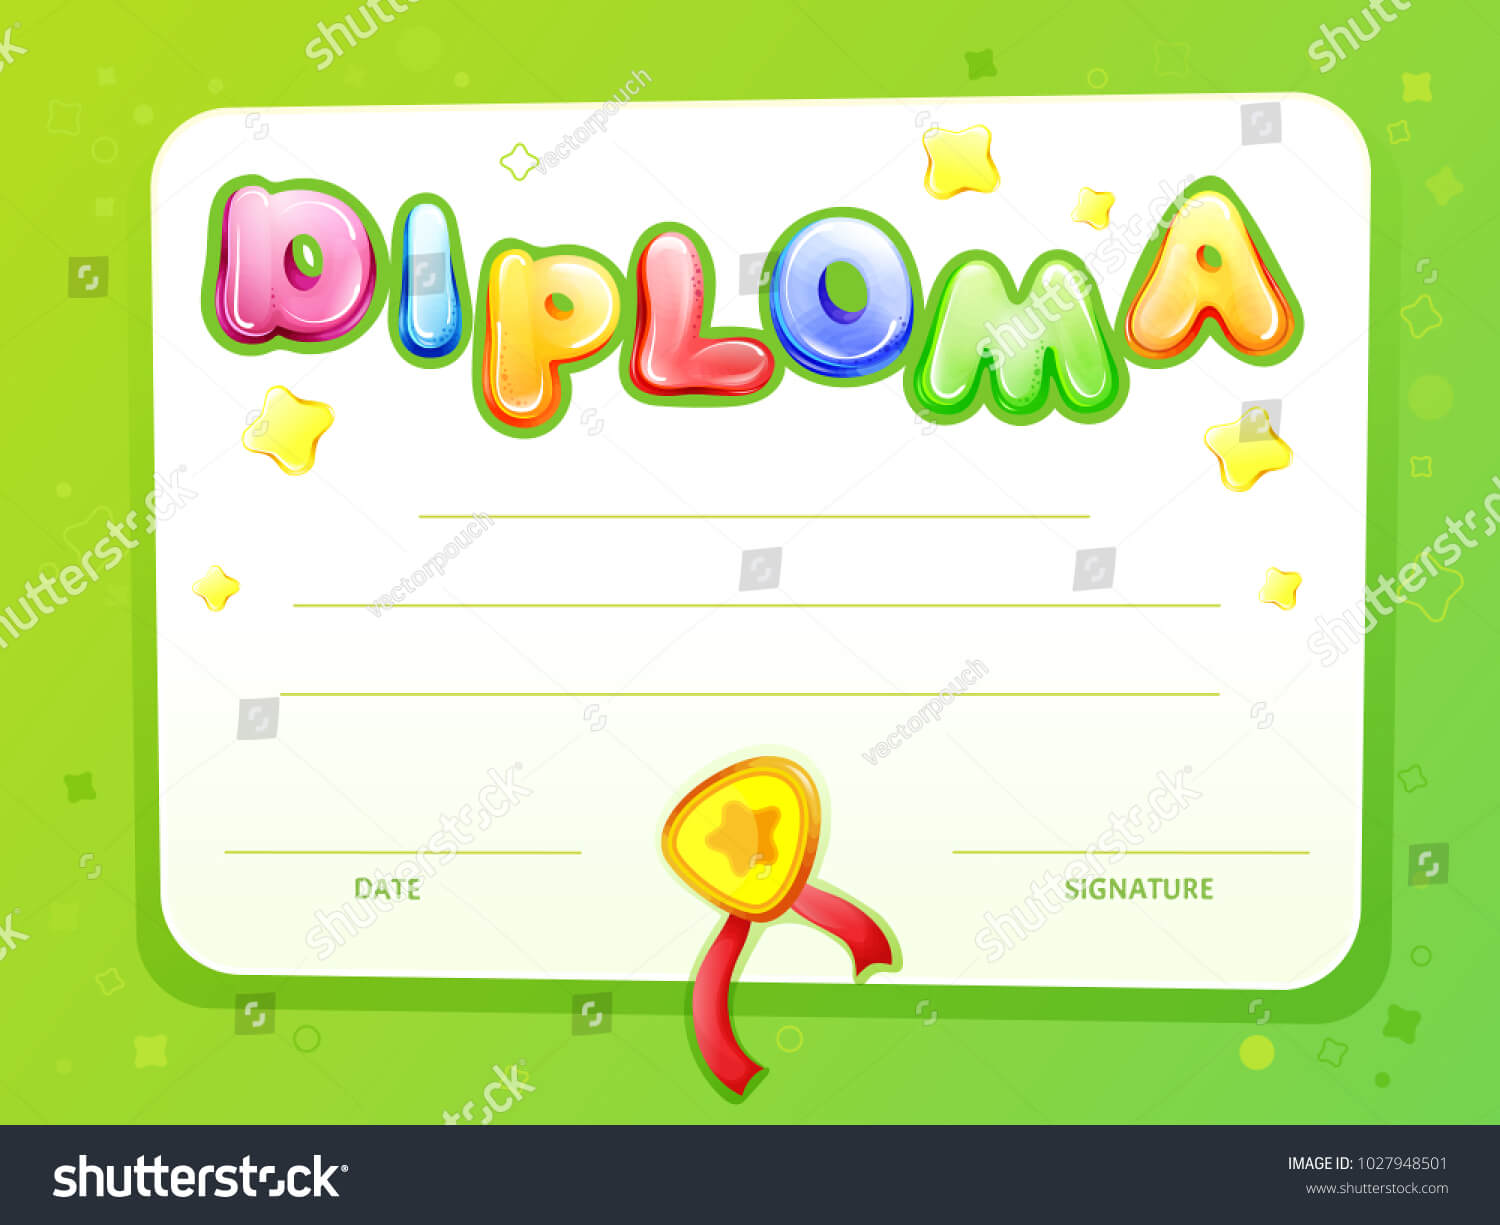 Стоковая Векторная Графика «Cartoon Kids Certificate Diploma For Certificate Of Achievement Template For Kids